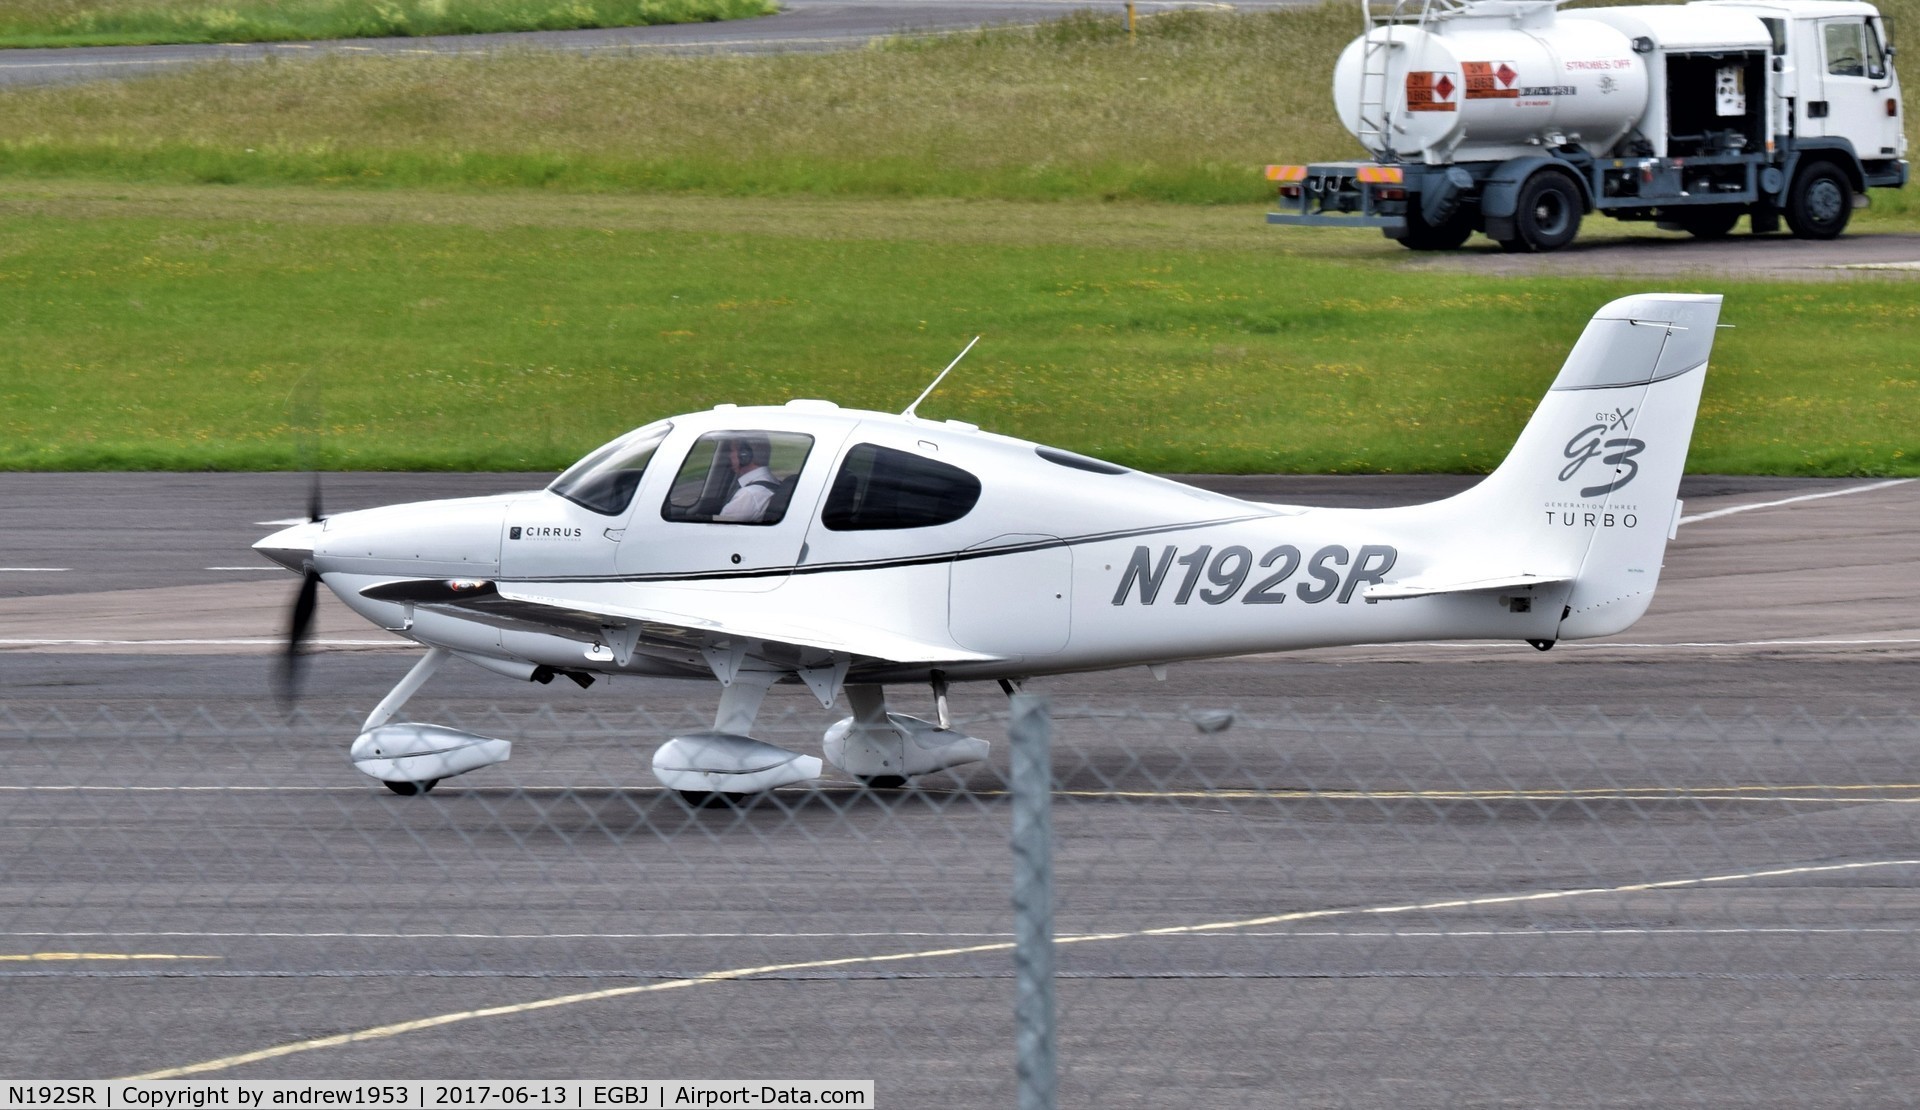 N192SR, 2007 Cirrus SR22 G3 GTSX Turbo C/N 2467, N192SR at Gloucestershire Airport.